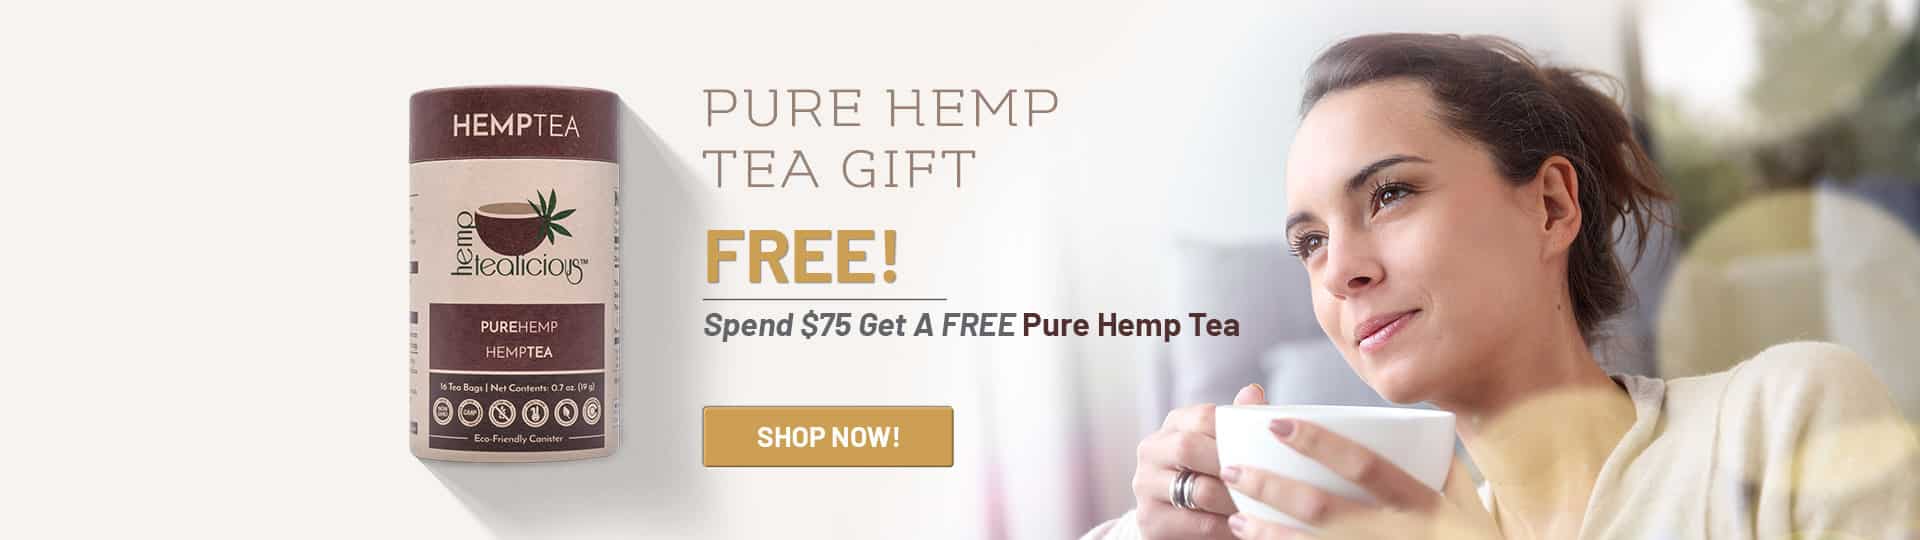 Pure Hemp Tea Free!